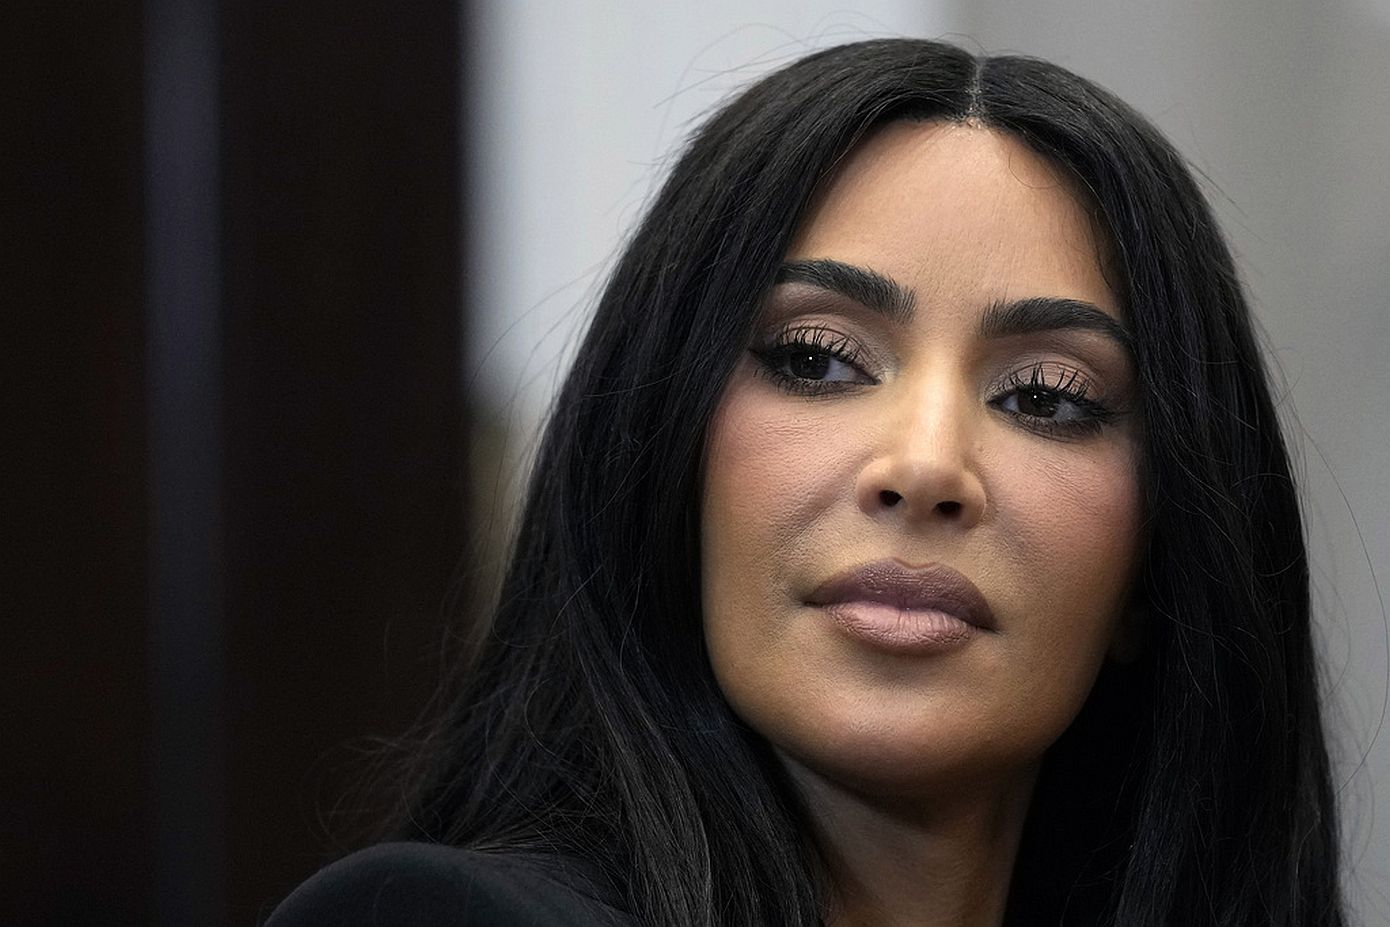 H Kim Kardashian έπαθε χημικό κάψιμο στα μαλλιά της που την οδήγησε σε χημικό &#8230;κόψιμο